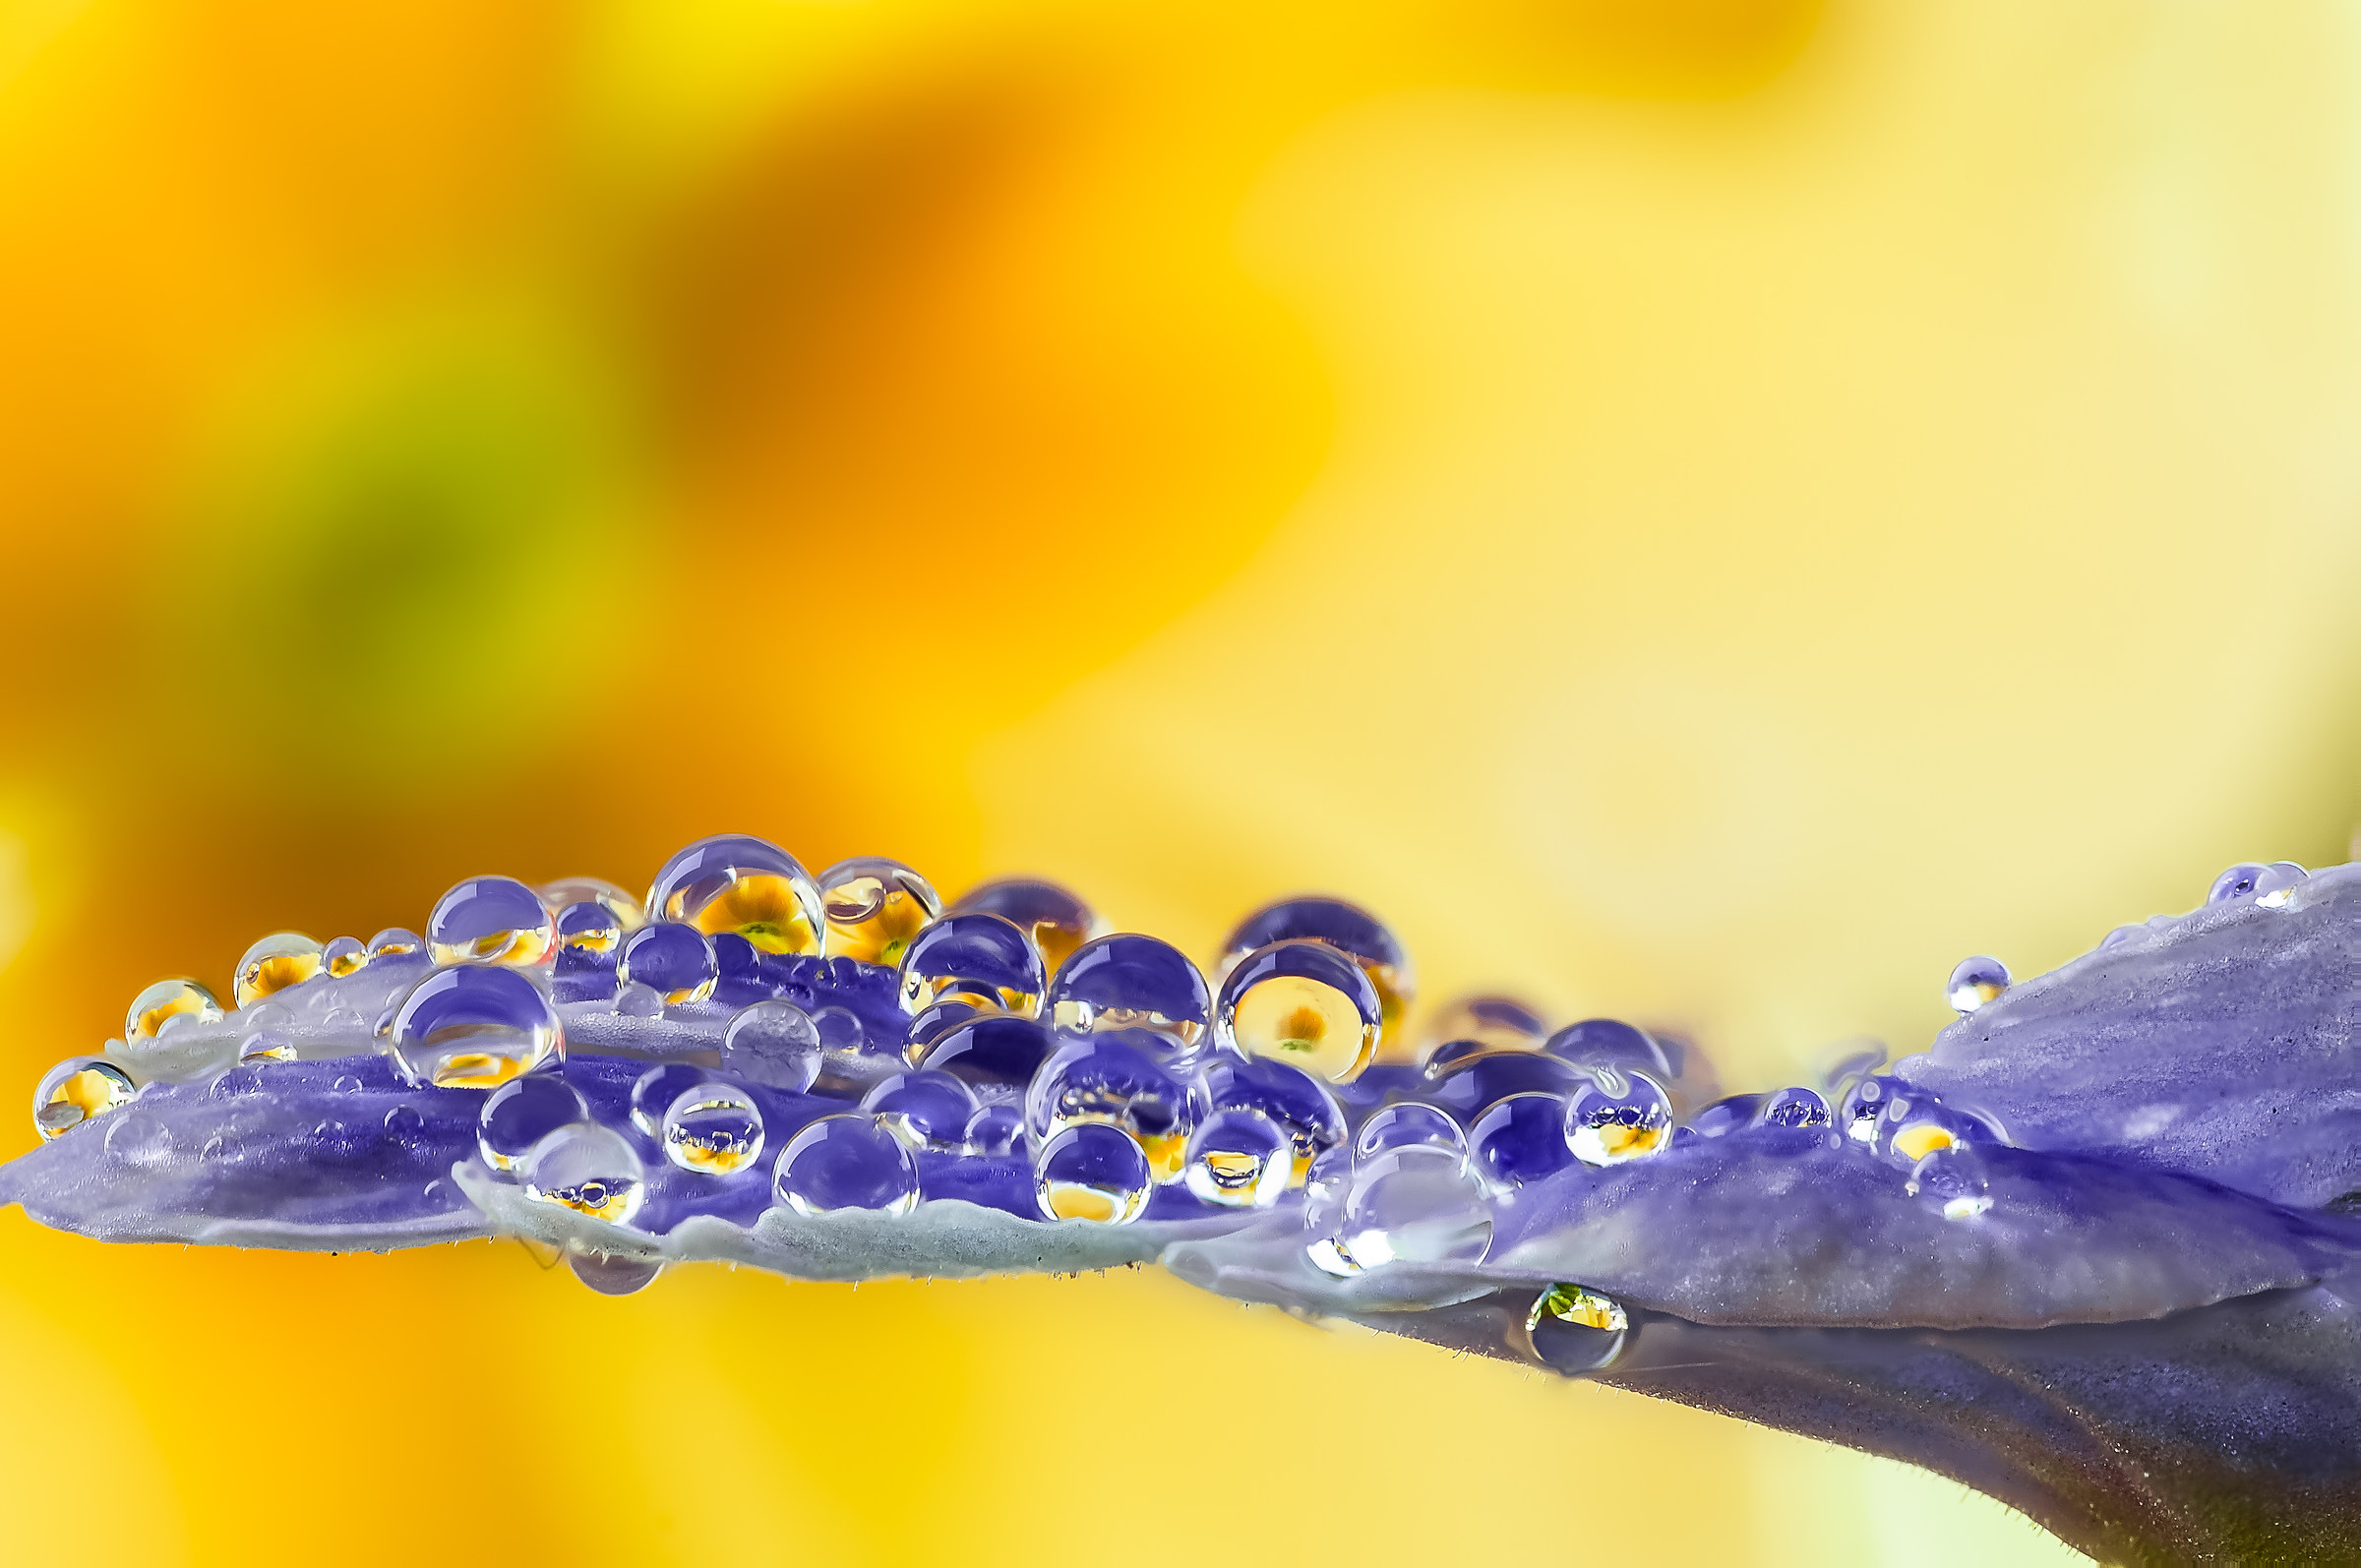 Drops & Flowers Macro fotografia by Mario Jr Nicorelli...